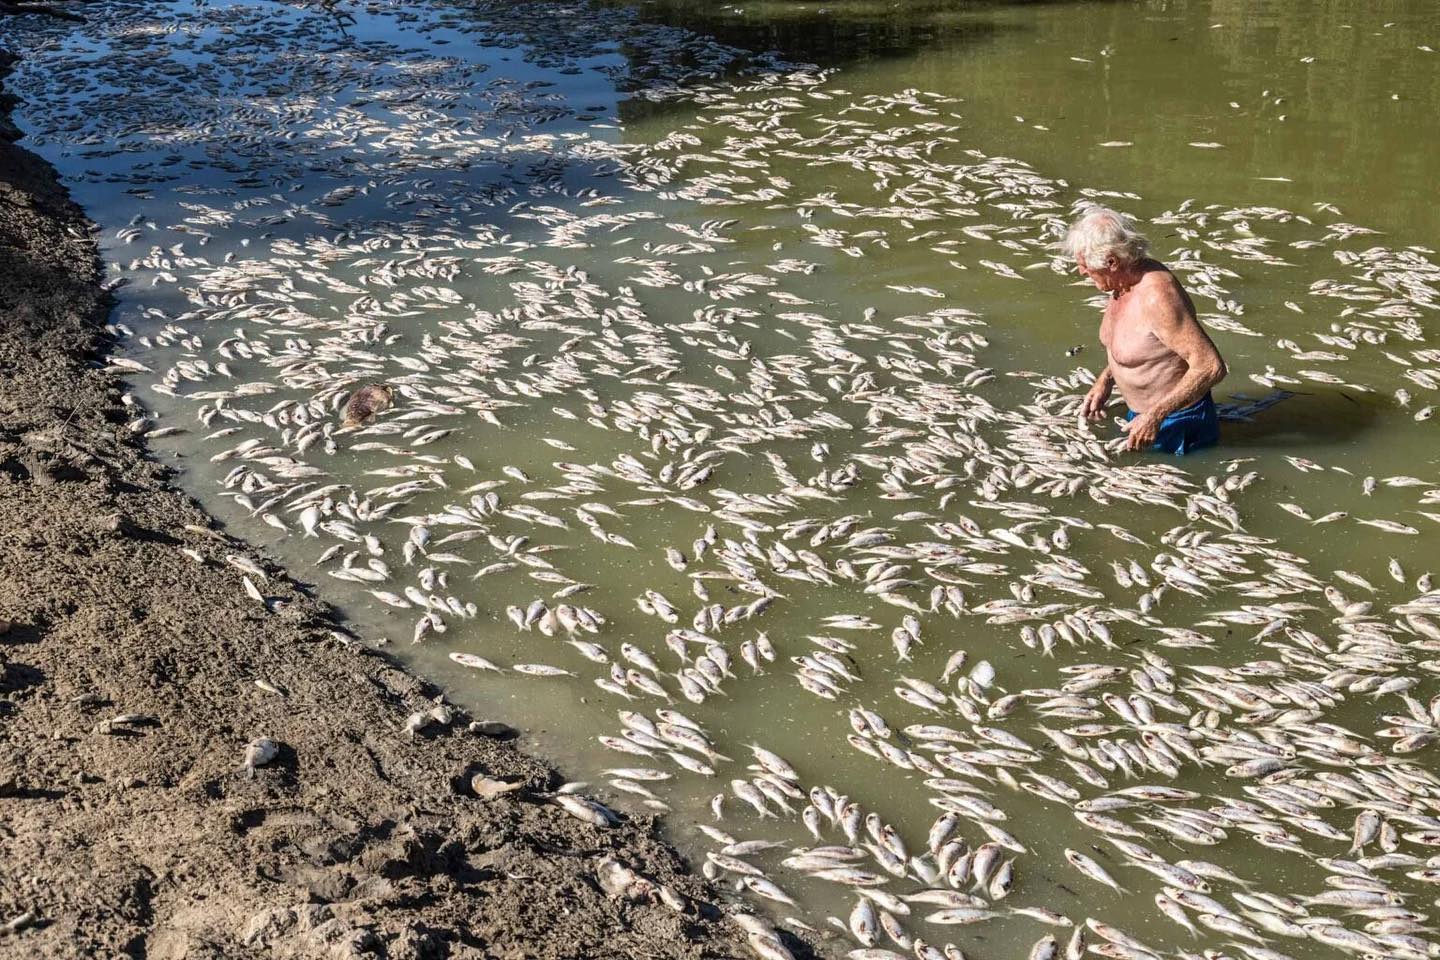 Millions of Dead Fish Clog Australian River in Catastrophic Fish Kill